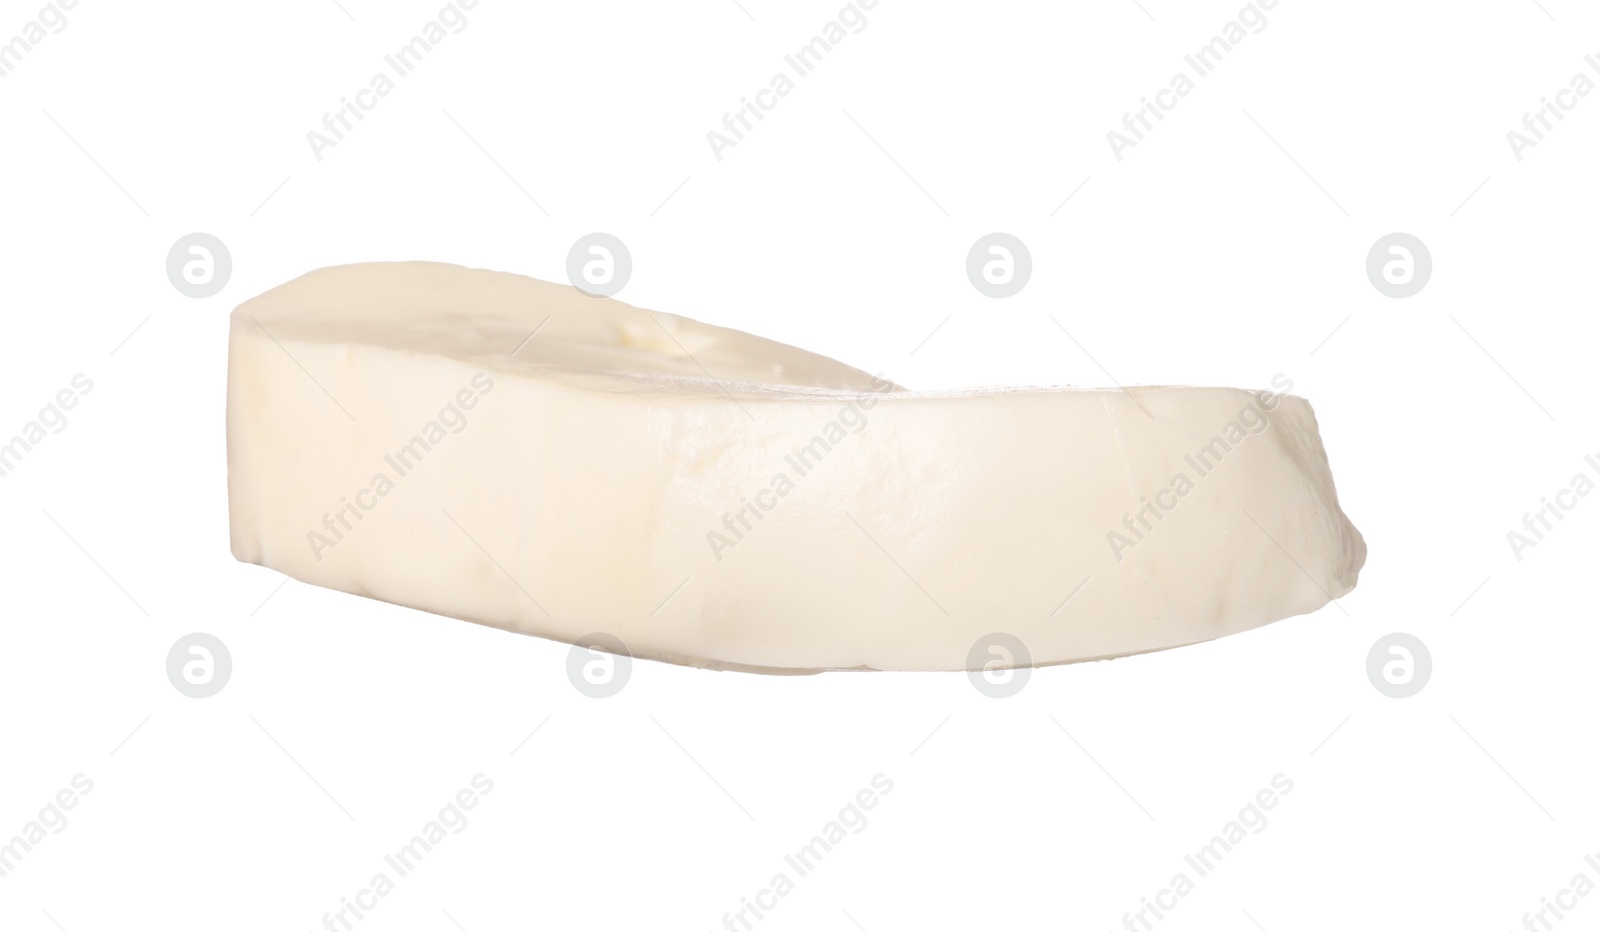 Photo of One slice of mozzarella cheese isolated on white